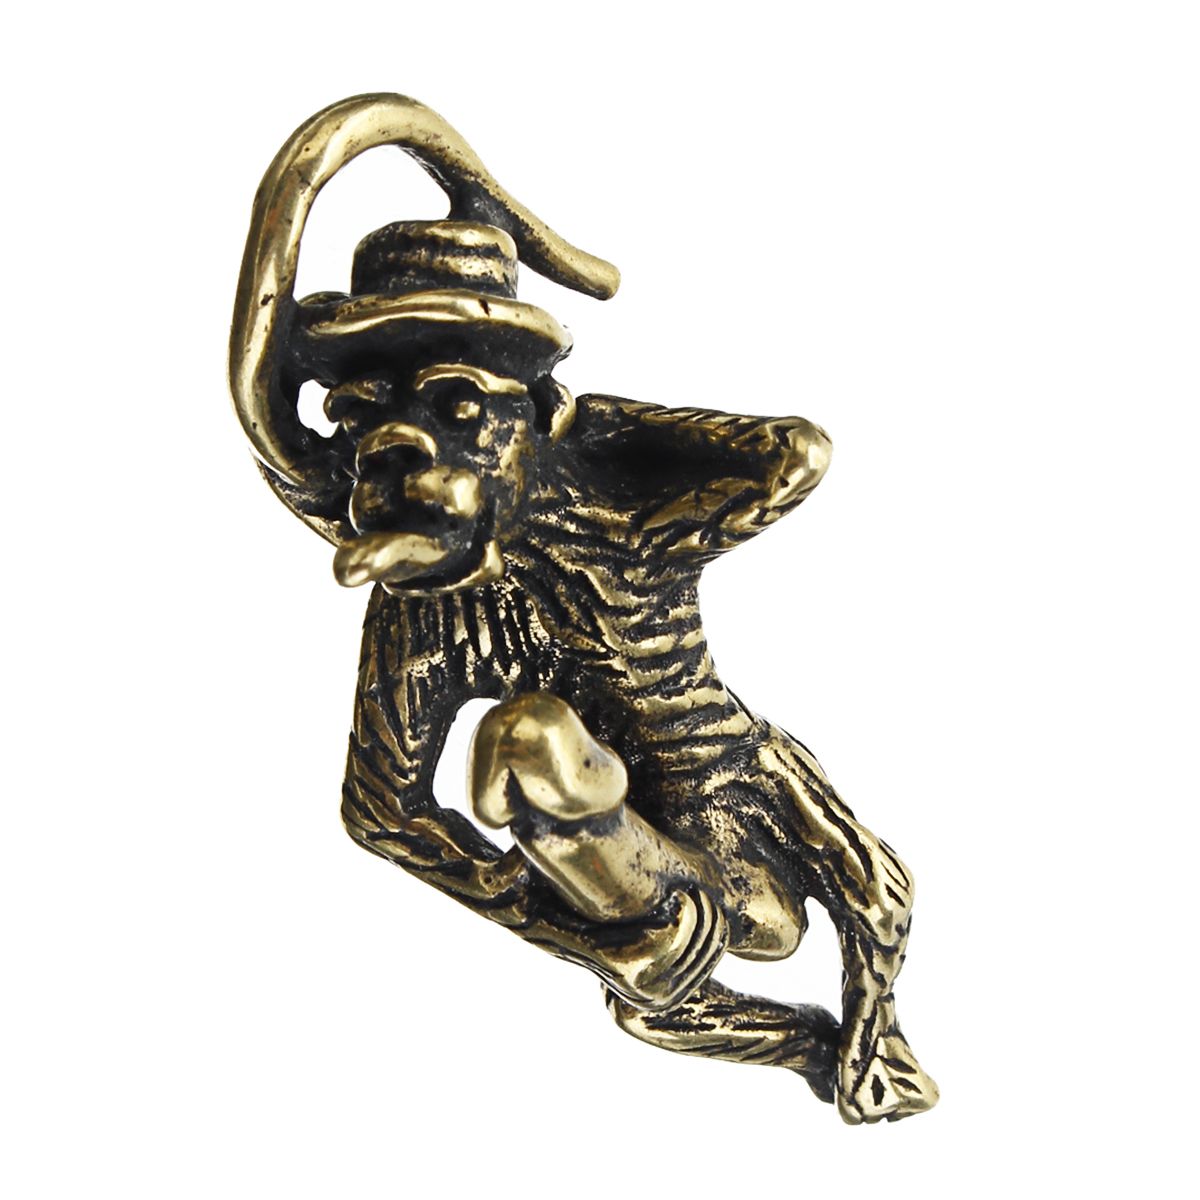 1pc-Thai-Amulet-Paladkik-Monkey-Key-Clip-Chain-Miniature-Brass-Magic-Holy-Wealthy-Luck-Gift-Decor-1542825